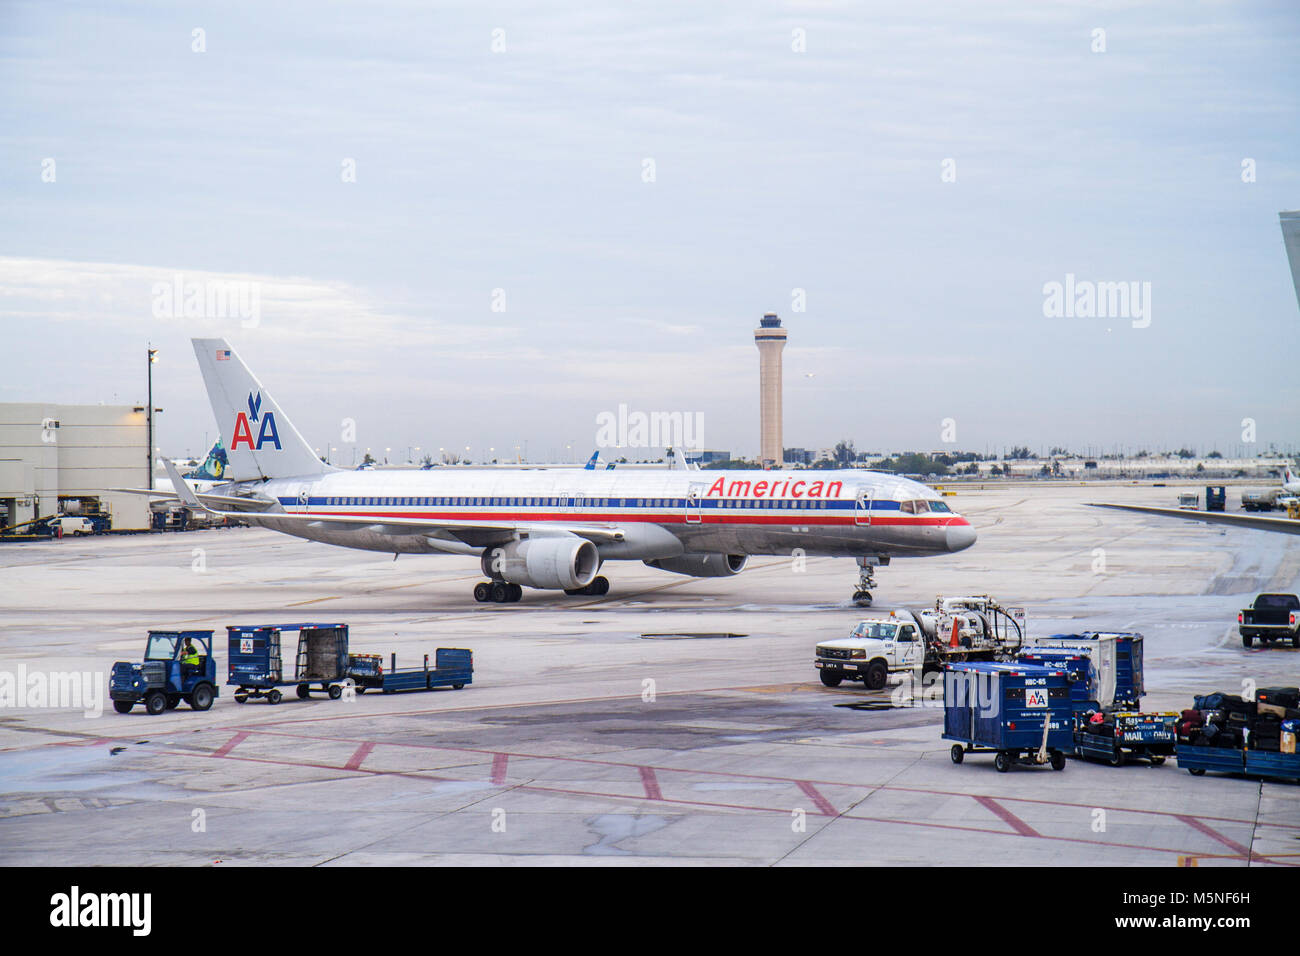 Miami Florida International Airport MIA, porte, tarmac, American Airlines, avion de ligne commercial avion avion avion avion, tour de contrôle de la circulation aérienne, Banque D'Images